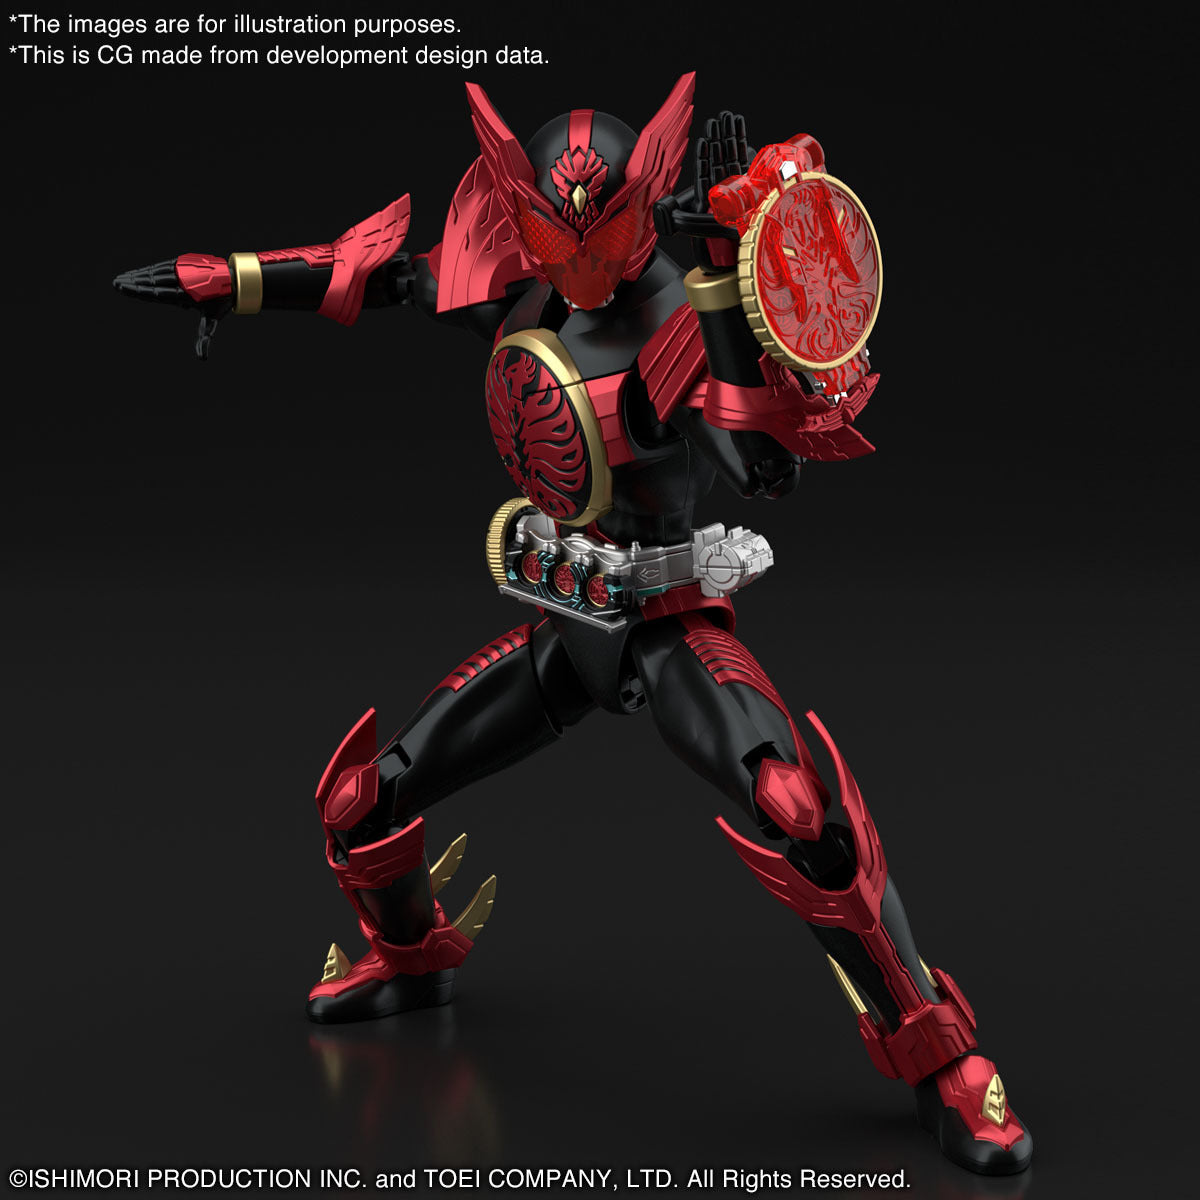 Figure-Rise Standard Kamen Rider Ooo Tajadoru Combo